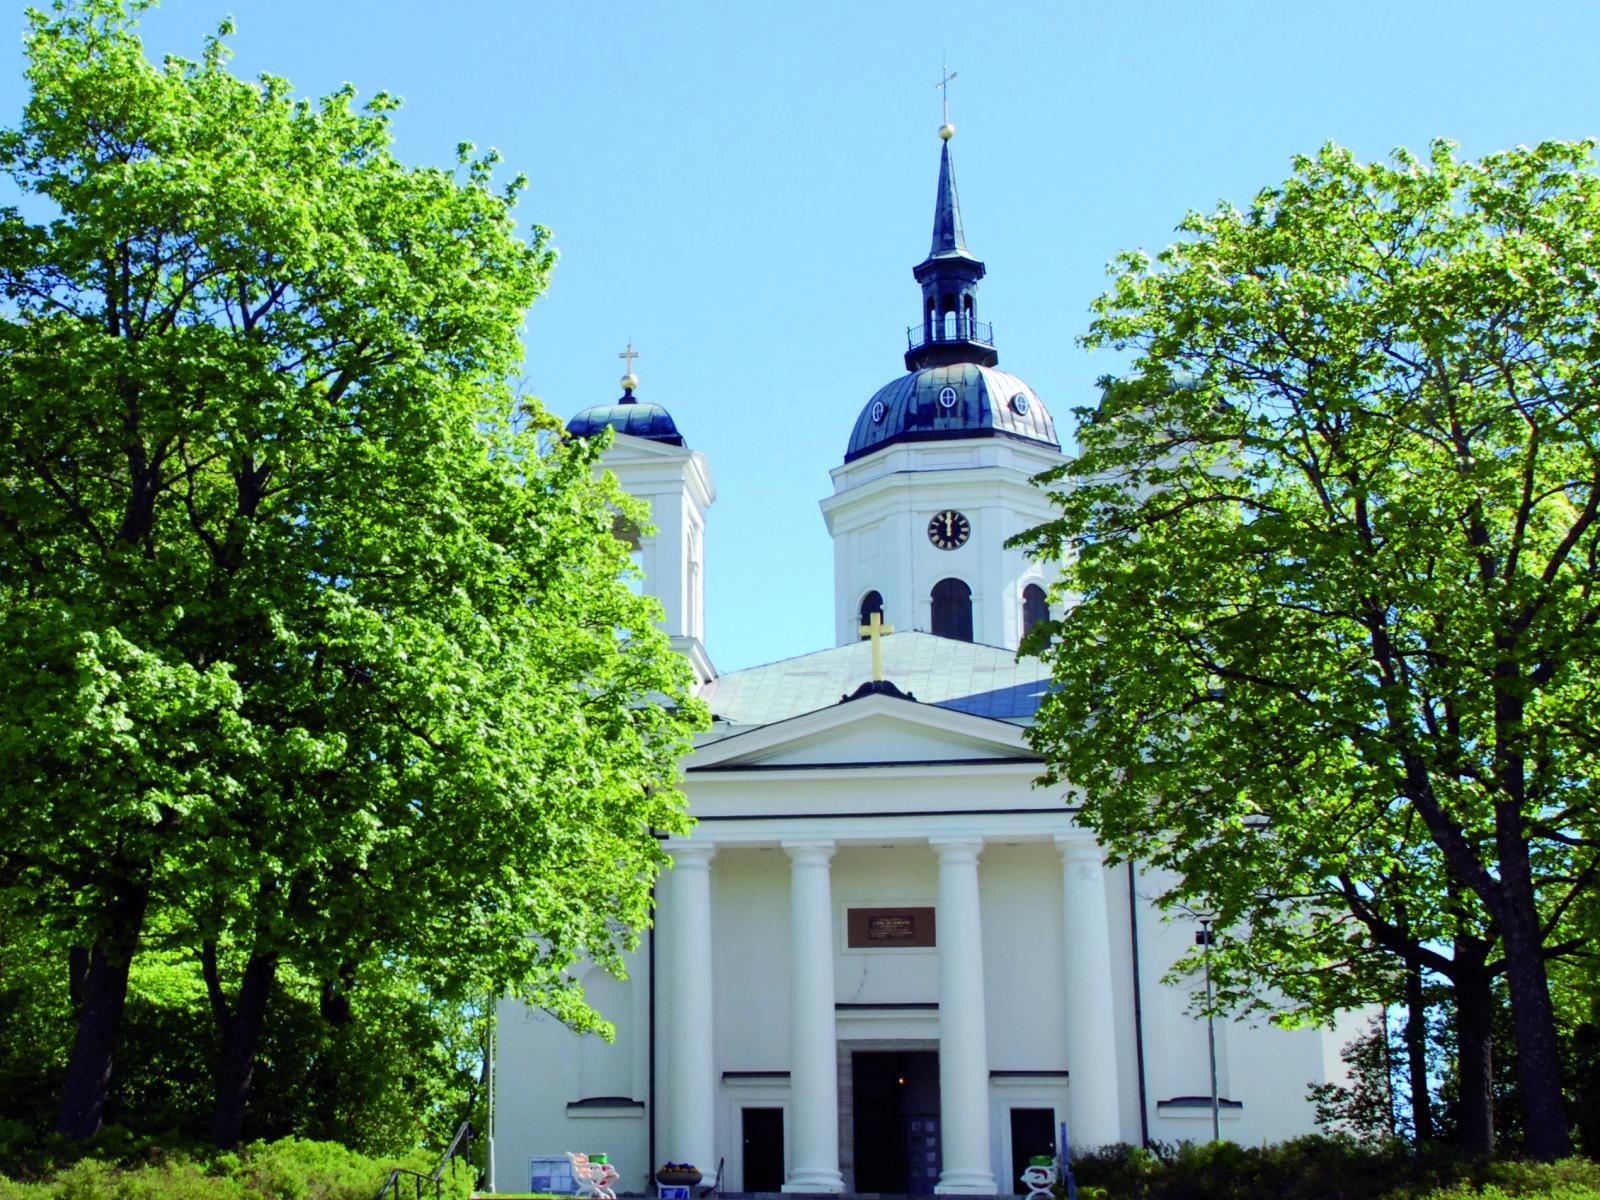 Härnösands Domkyrka – the white cathedral